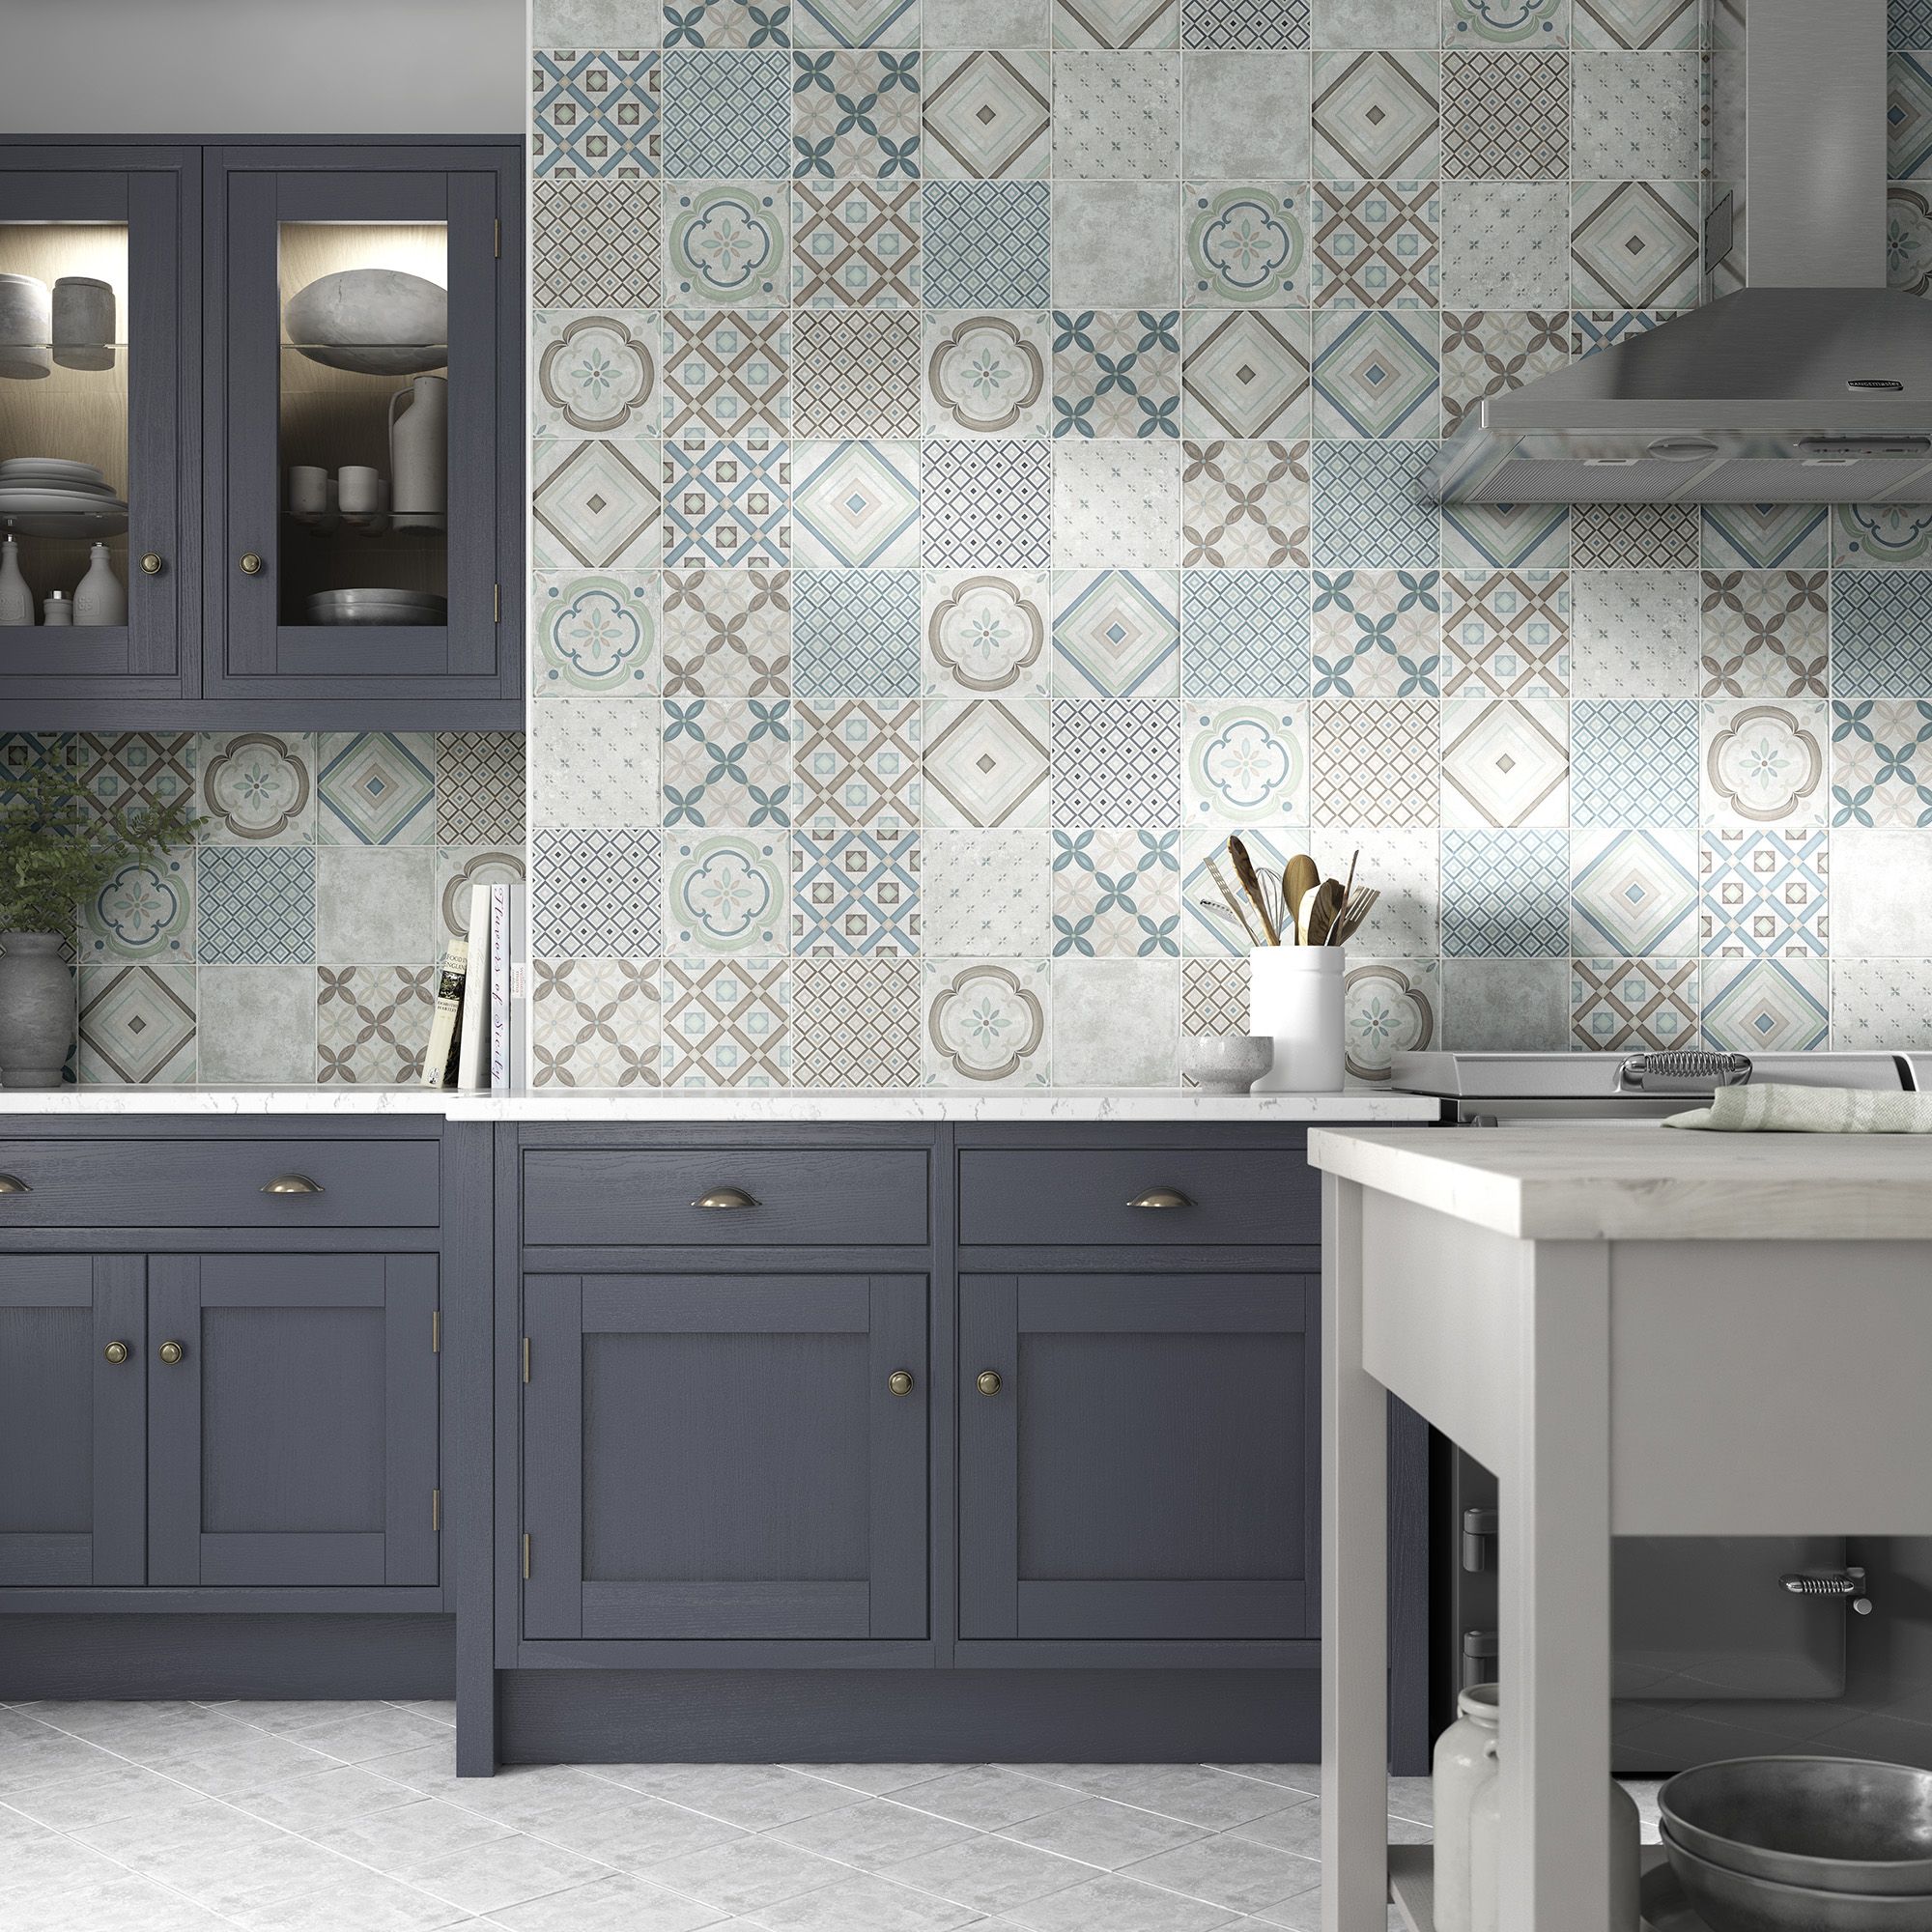 Johnson Tiles Matt Geometric Concrete effect Textured Porcelain Indoor Wall Tile, Pack of 26, (L)200mm (W)200mm